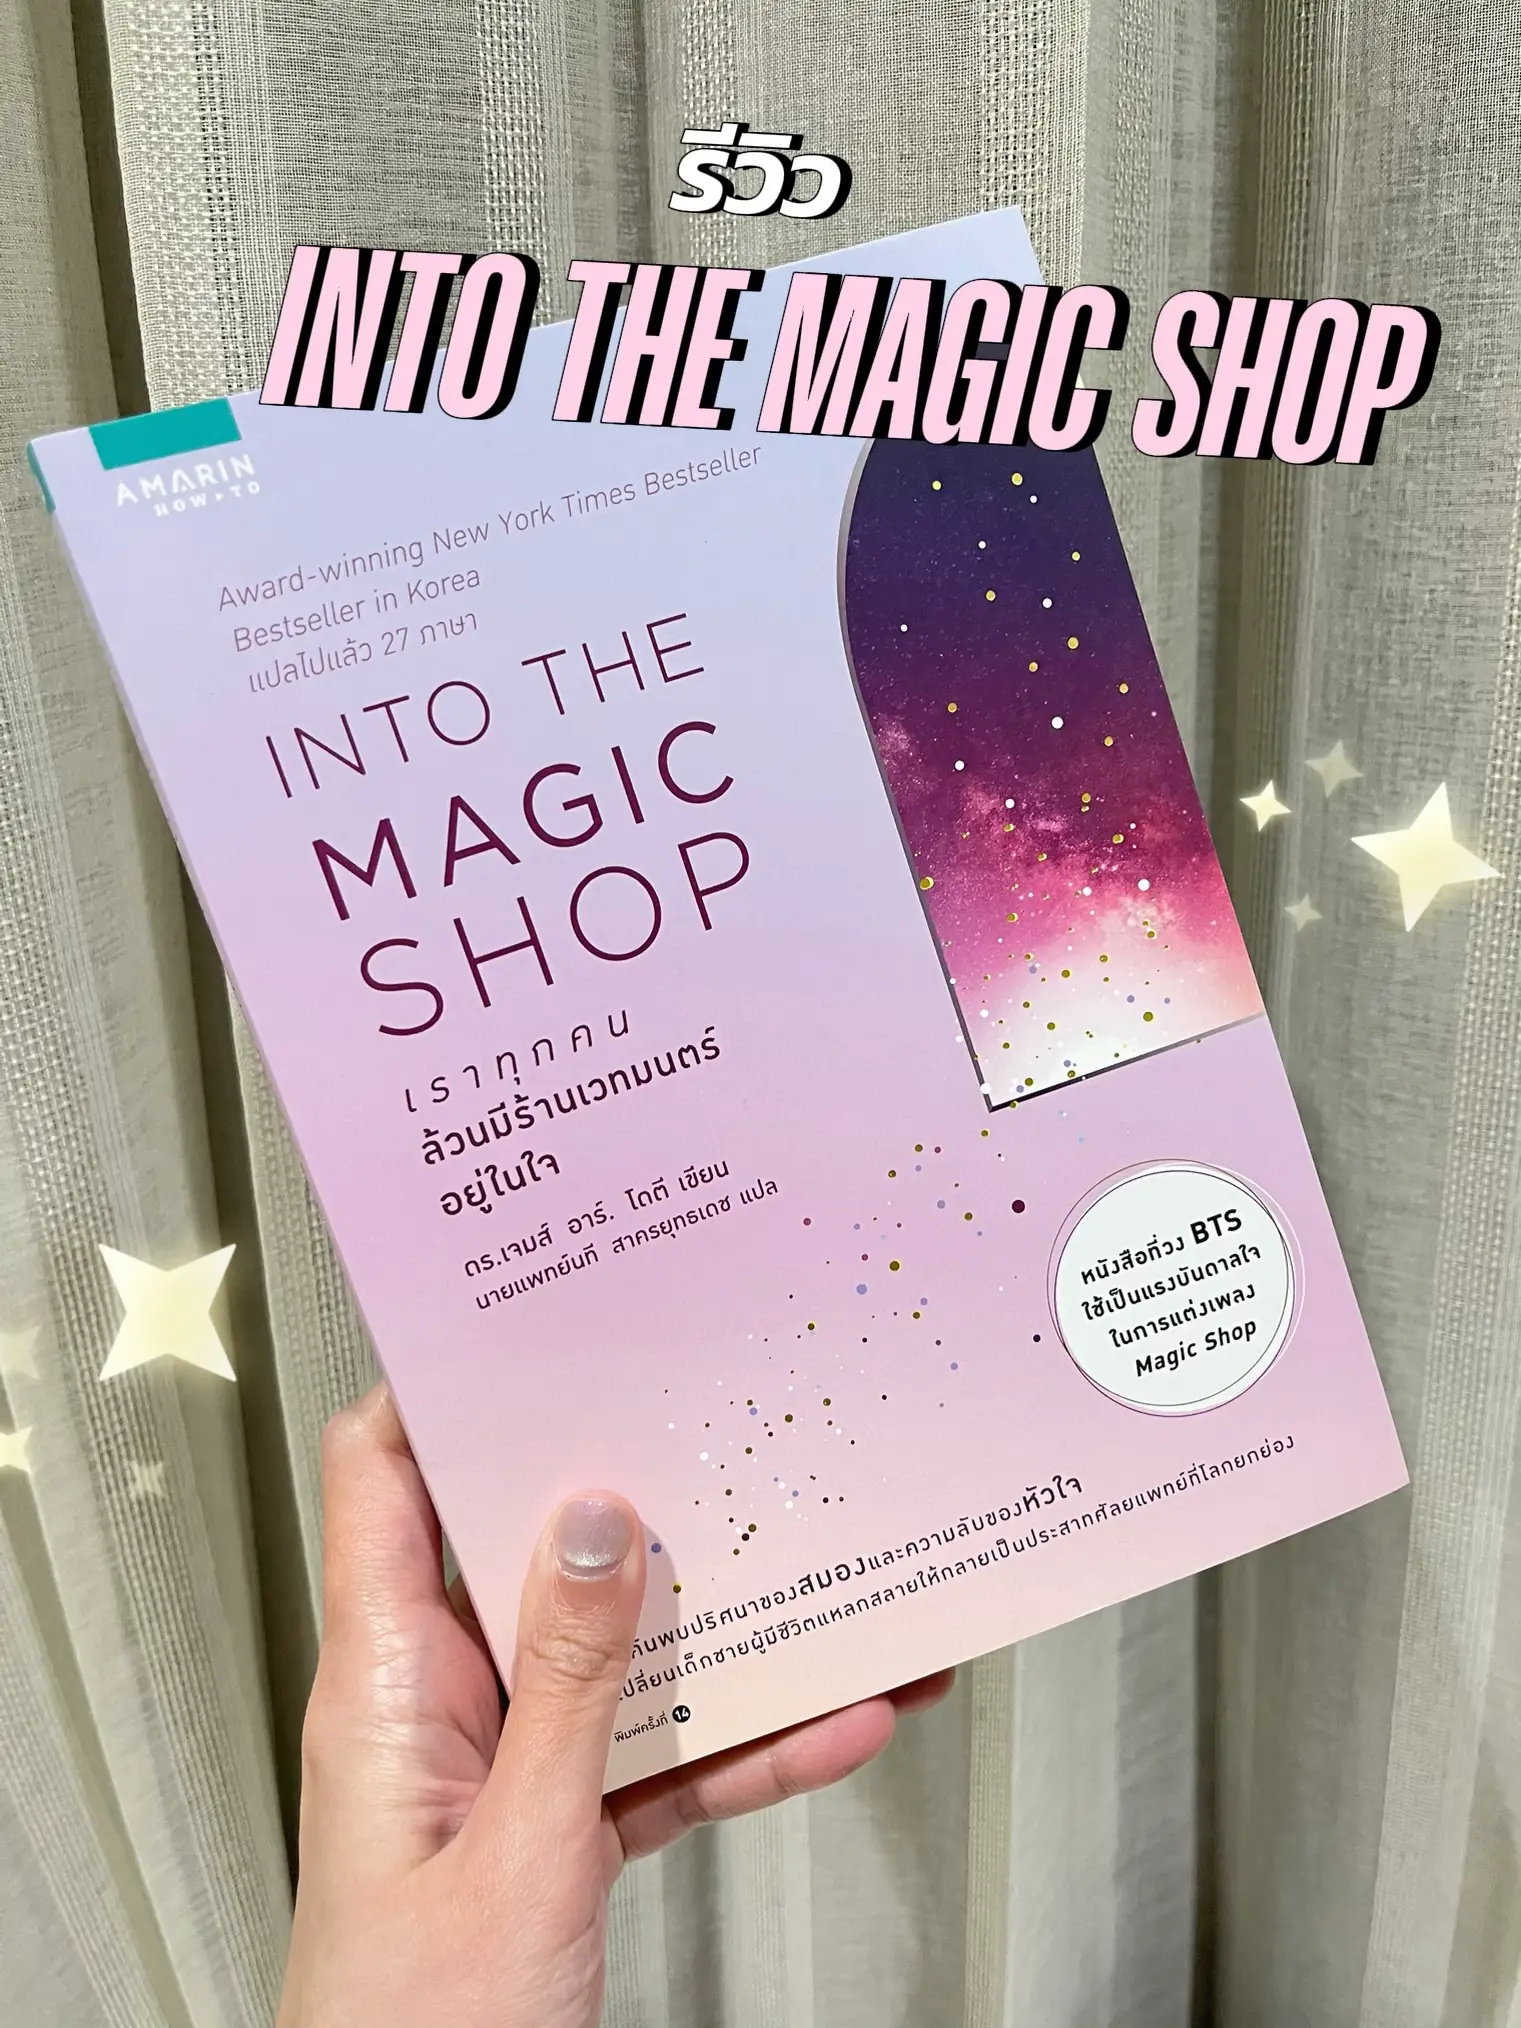 DVD/ブルーレイBTS INTO THE MAGIC SHOP